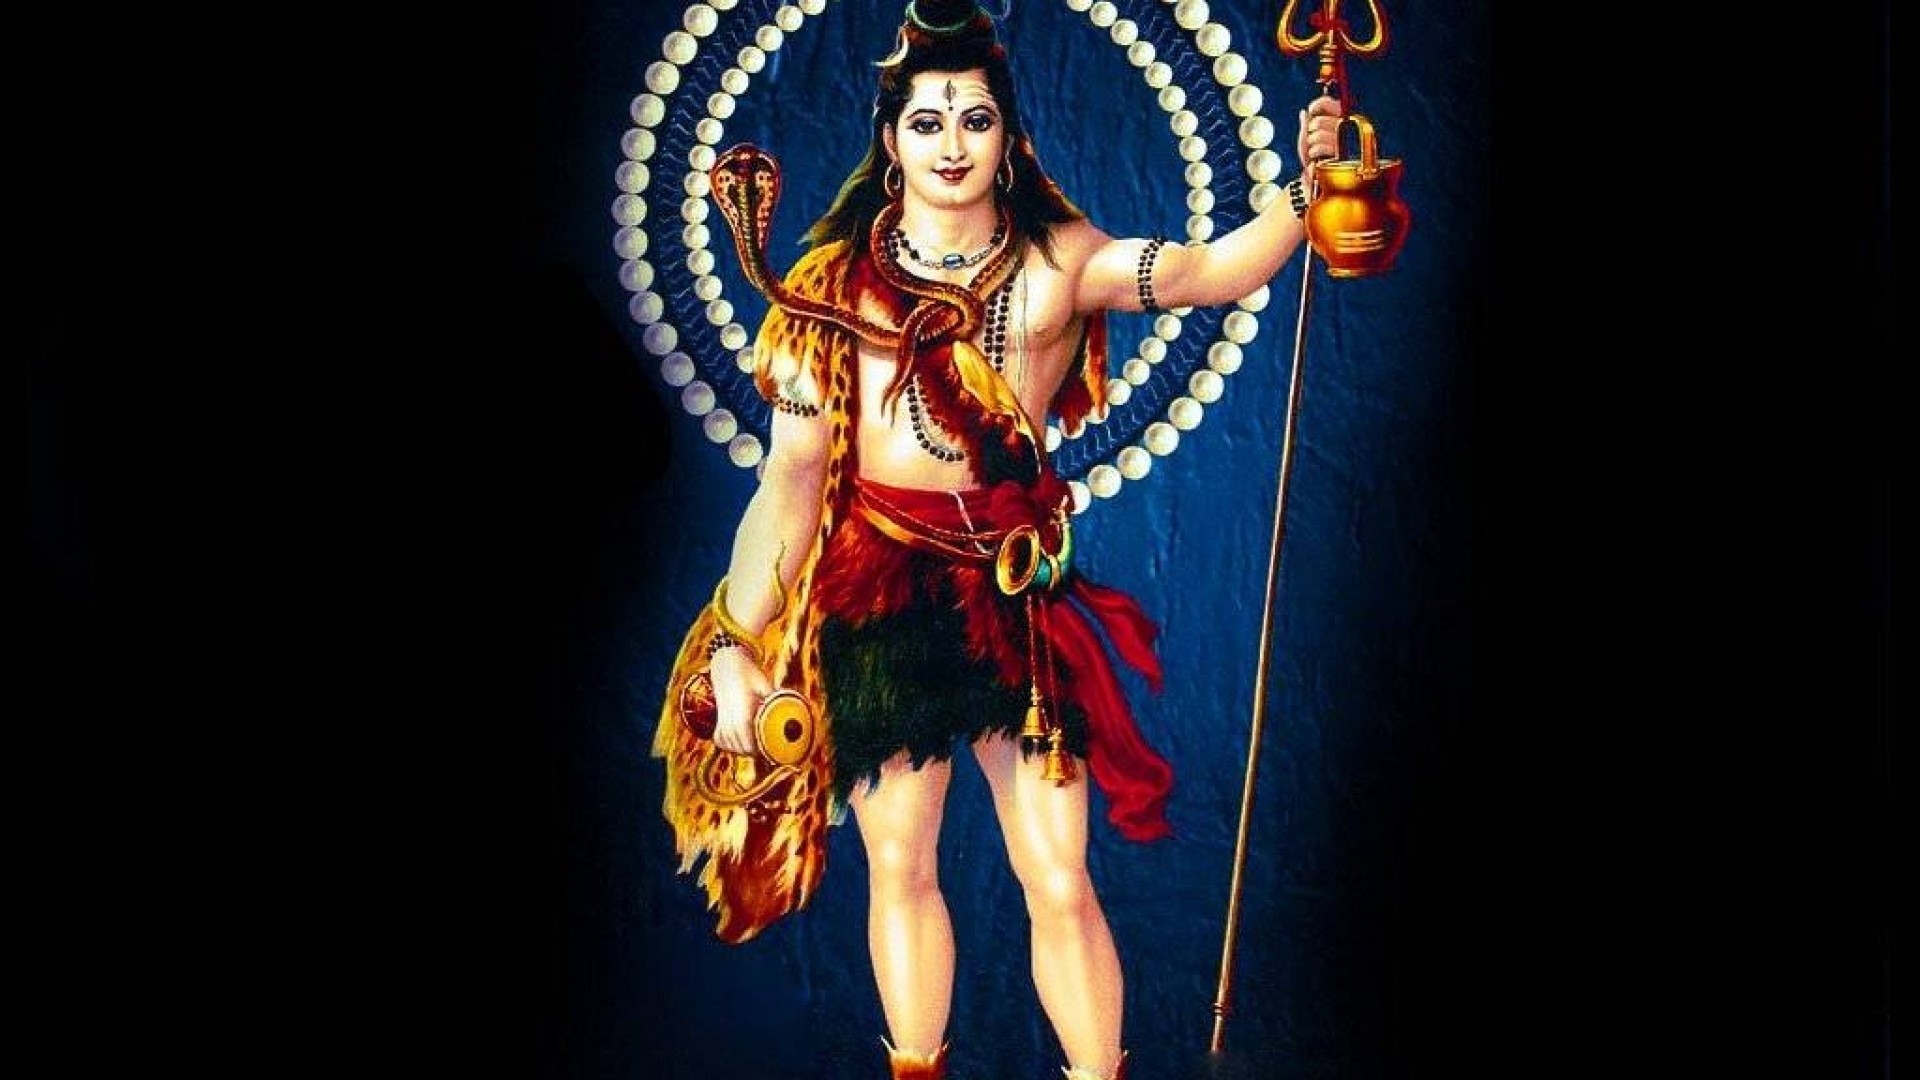 1920x1080 Happy Maha Shivaratri Lord Shiva Pictures. HD Lord Shiva Wallpapers